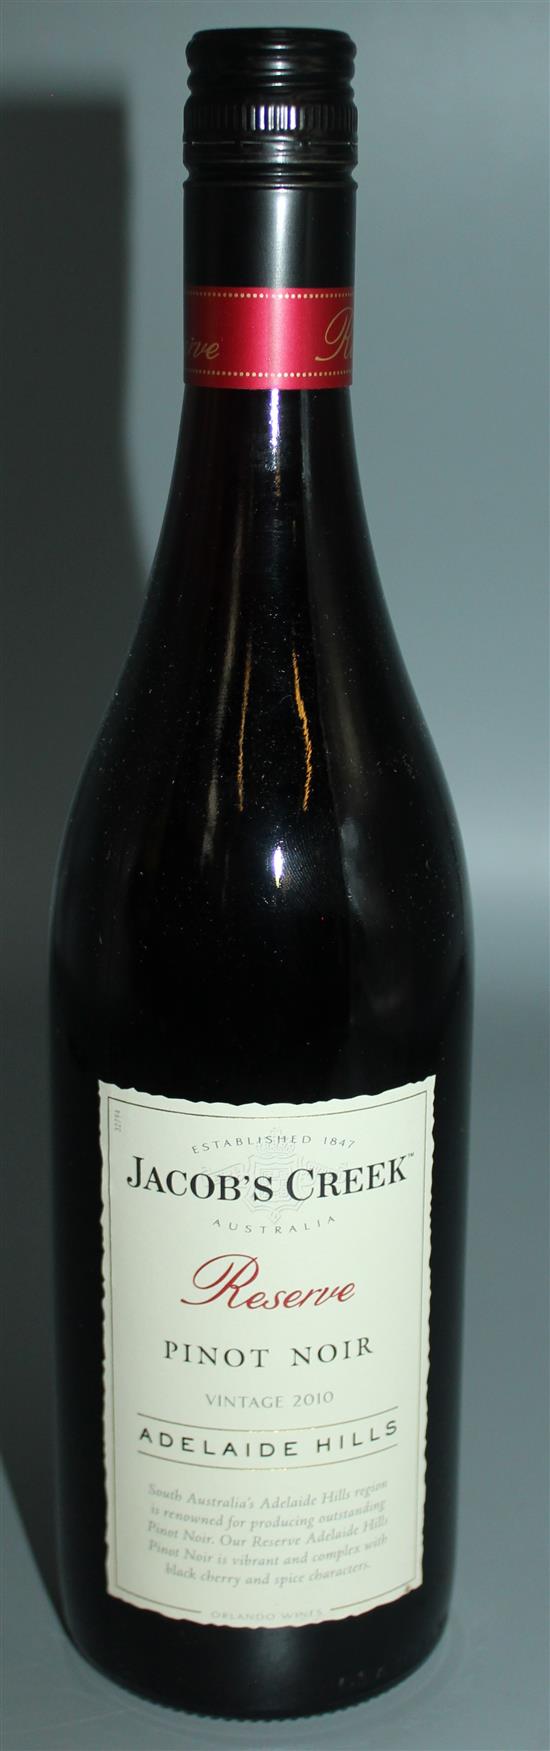 12 x Adelaide Hills reserve Pinot Noir, 2010